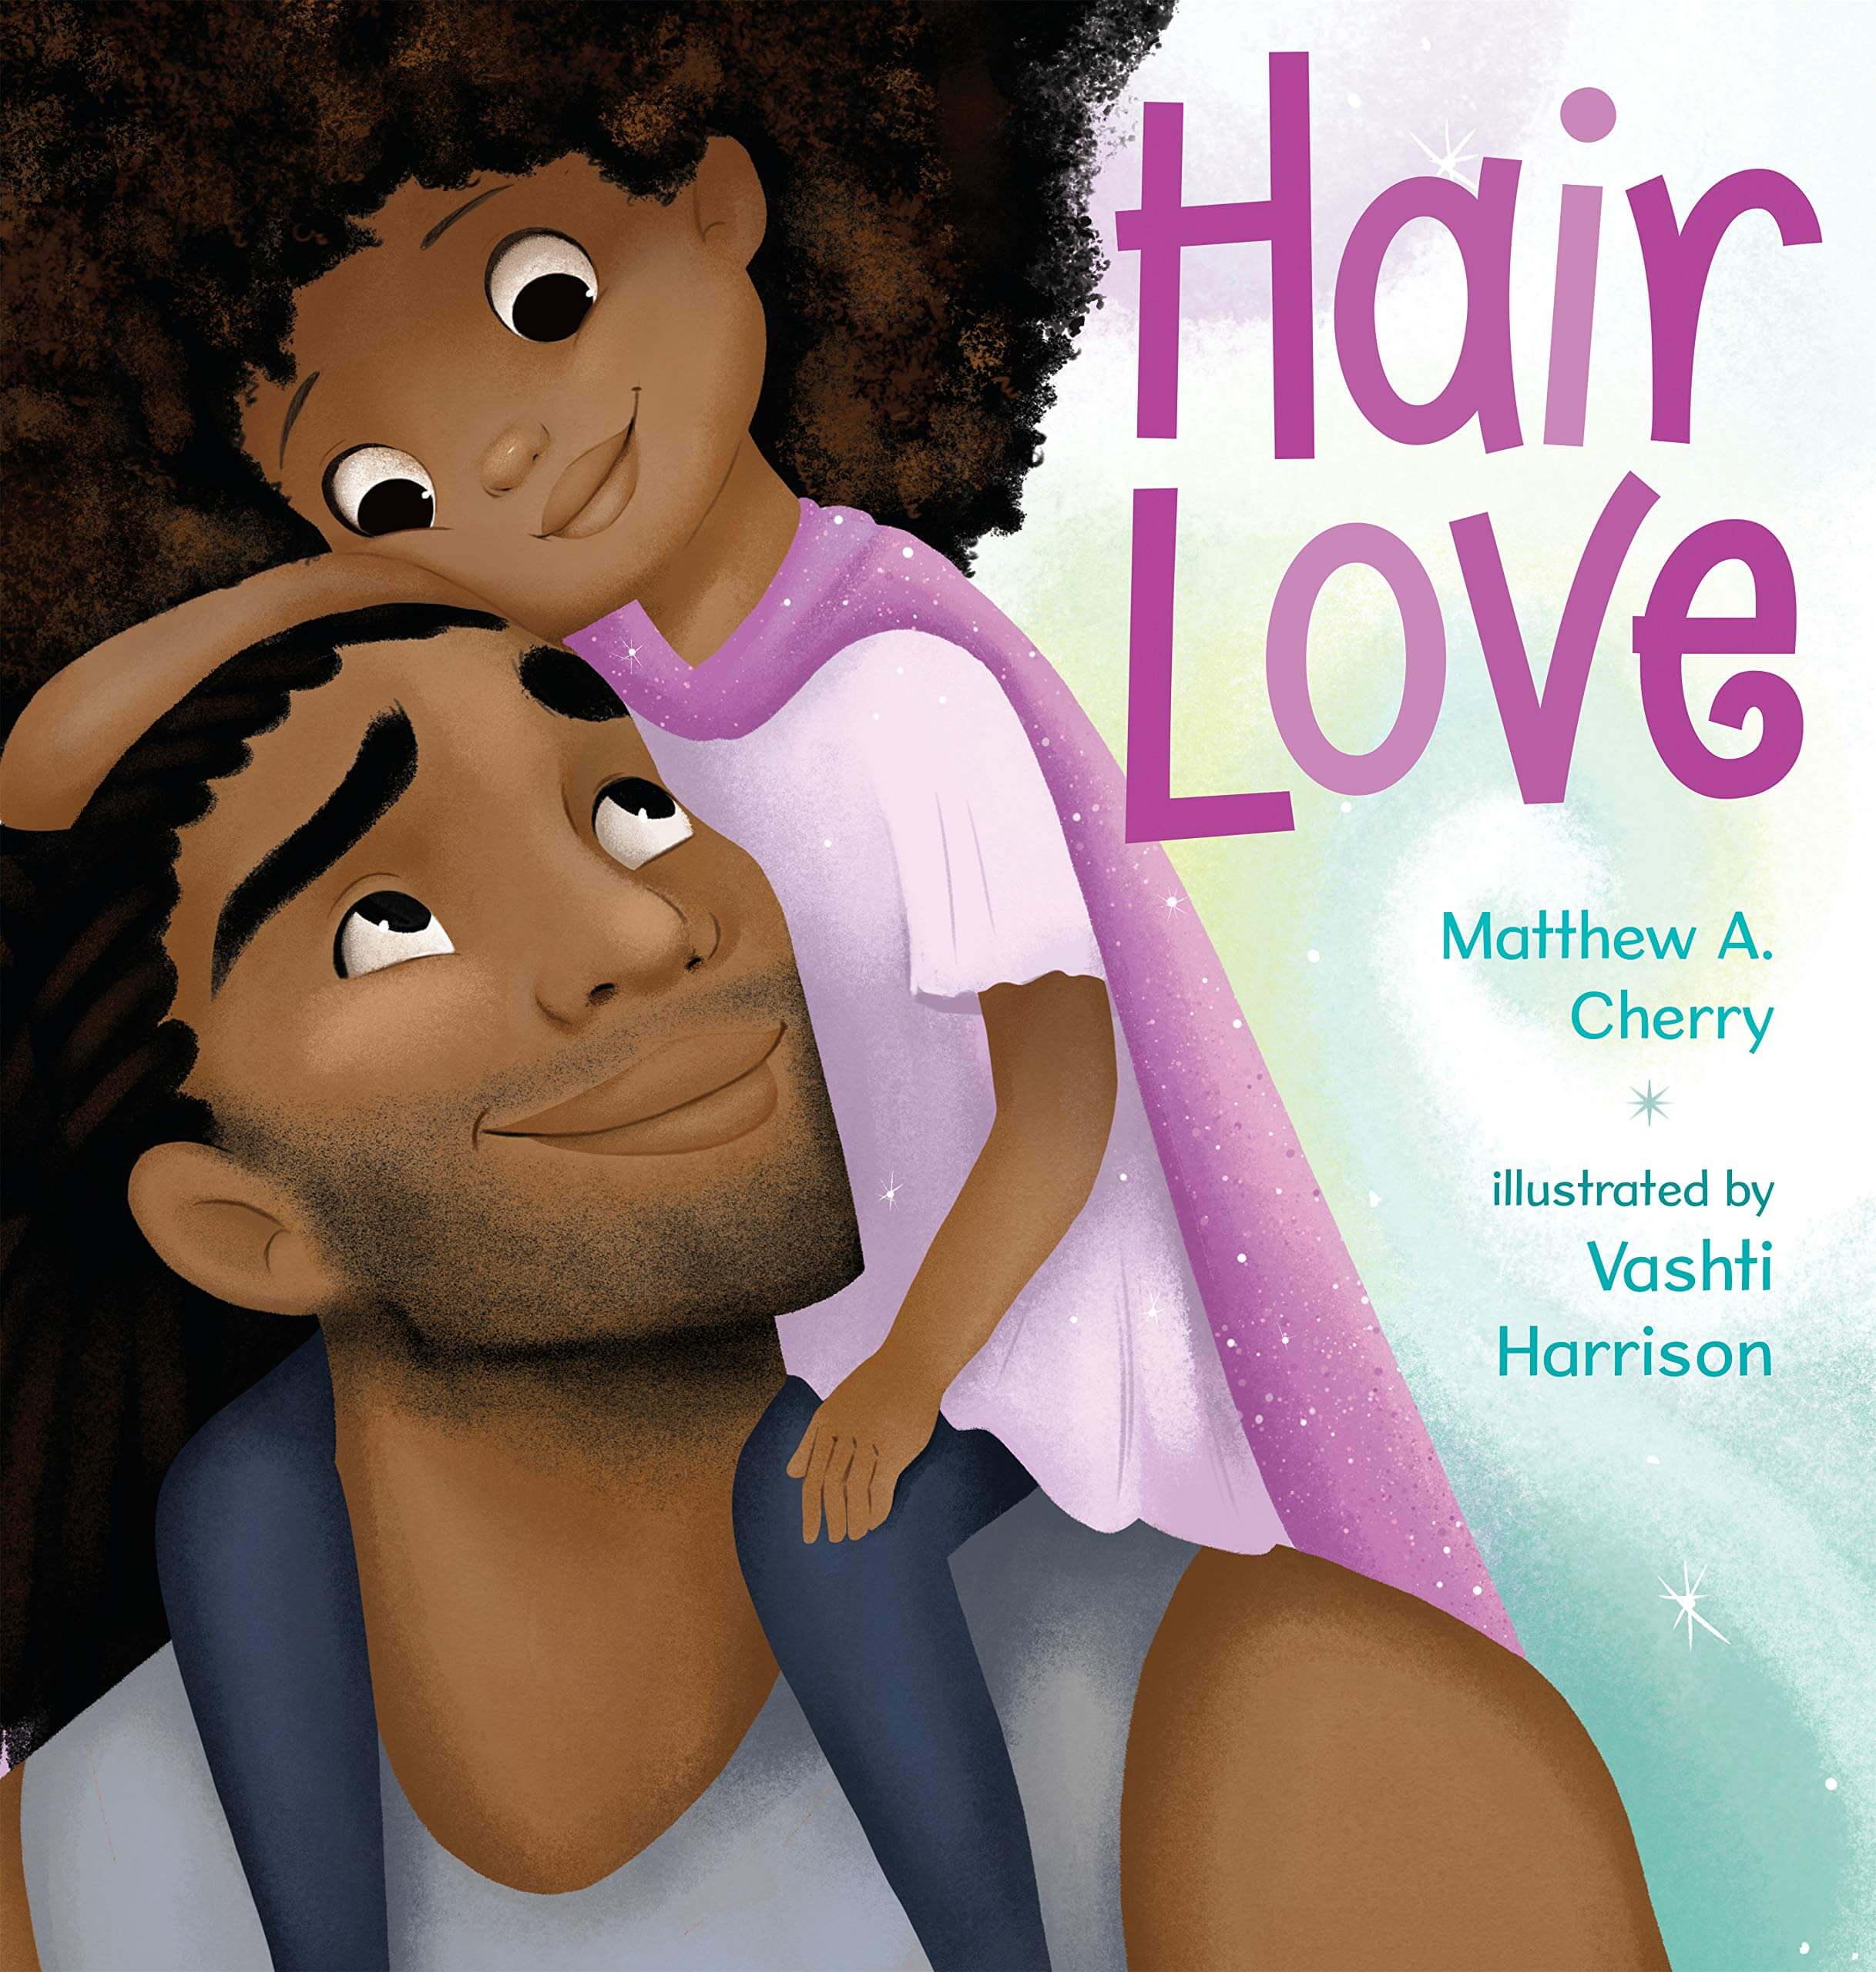  Hair Love, by Matthew A. Cherry, Illustrated by Vashti Harrison